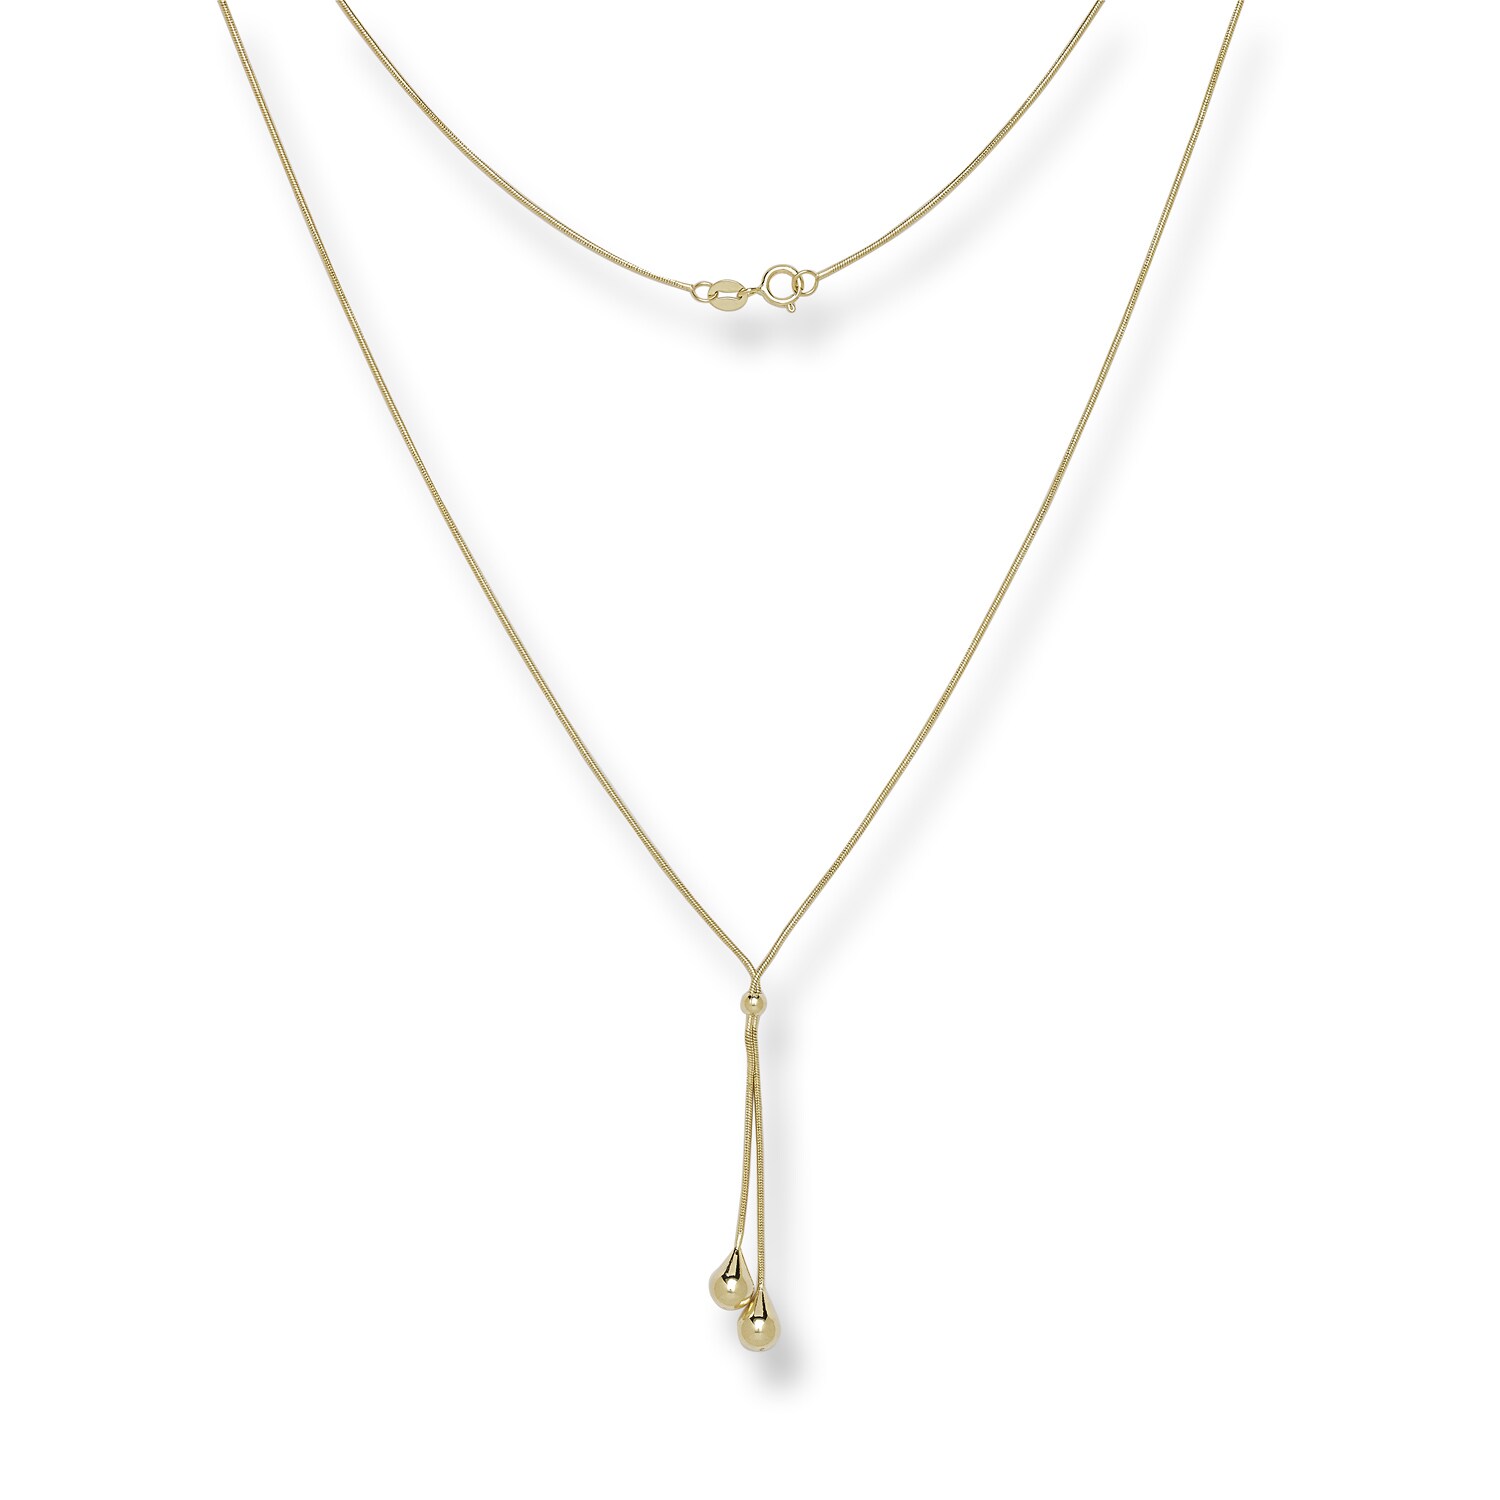 LariatTeardrop Necklace Gold or Silver Drop Pendant necklace